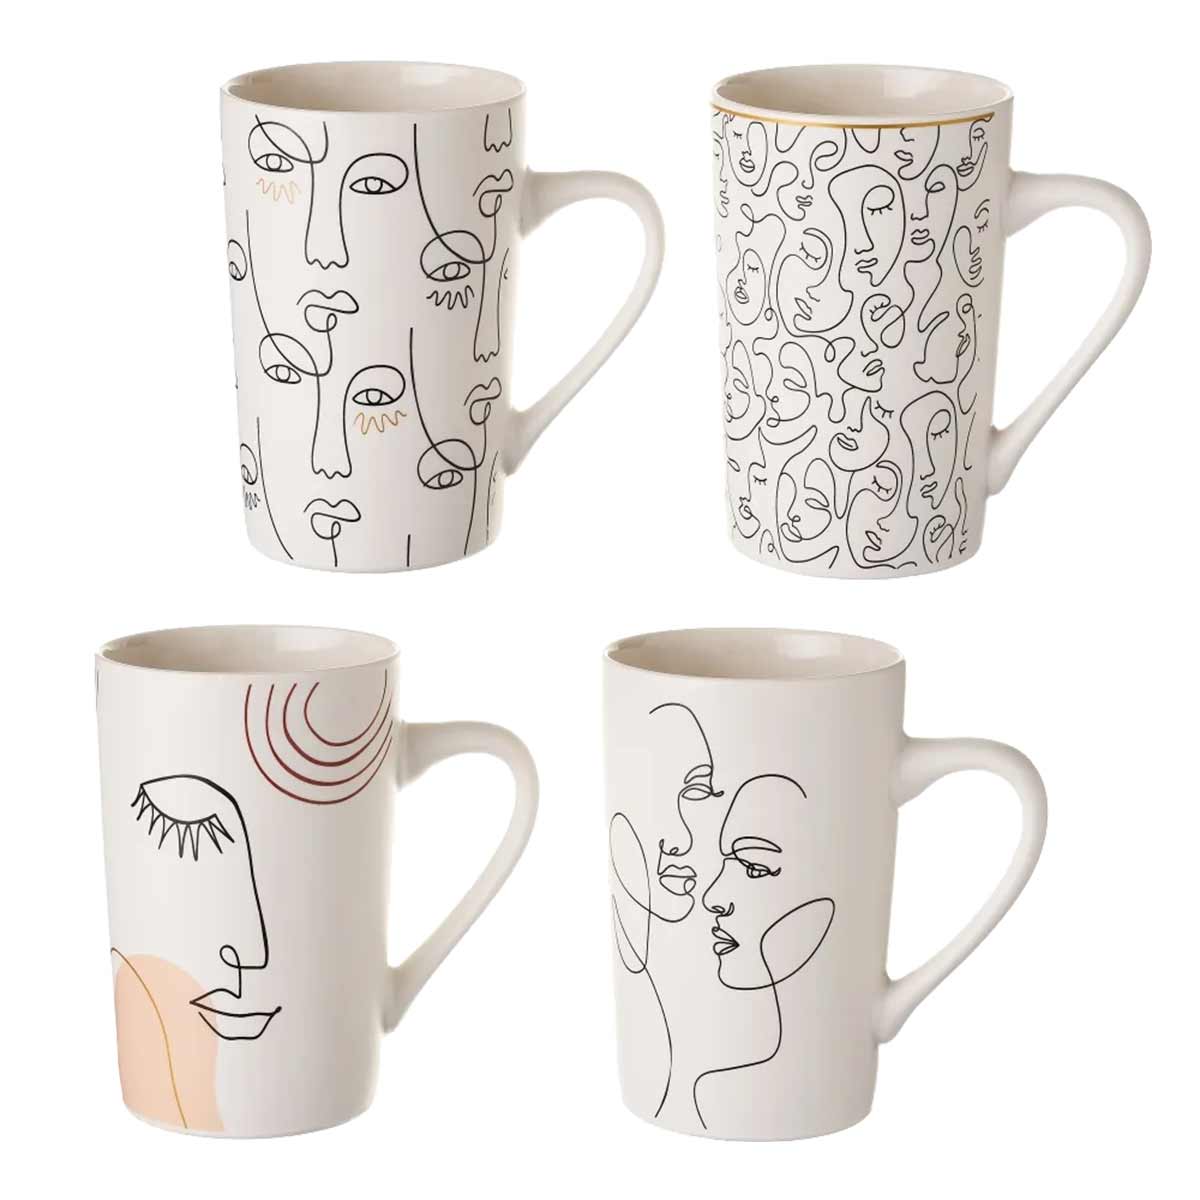 Set of 4 ceramic mugs